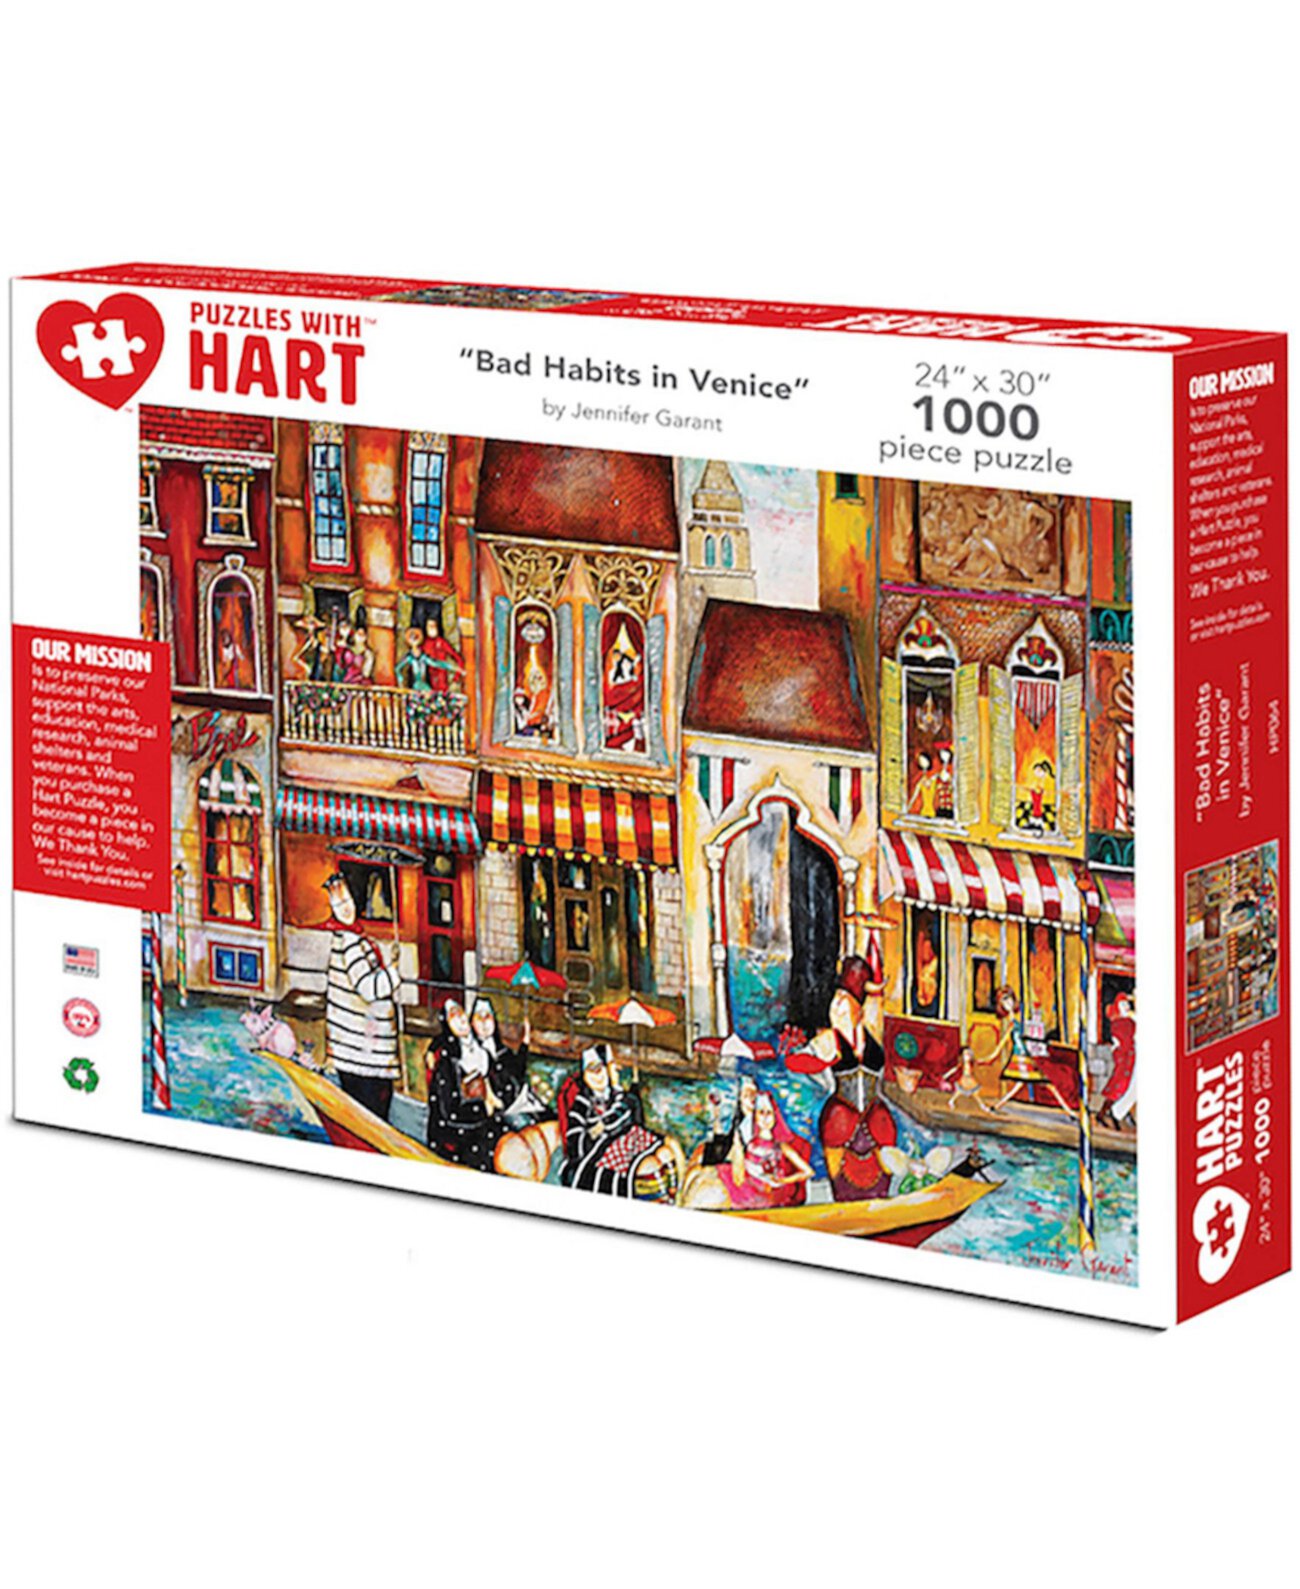 Плохие привычки в Венеции, 24 x 30 дюймов, набор Дженнифер Гарант, 1000 предметов Hart Puzzles